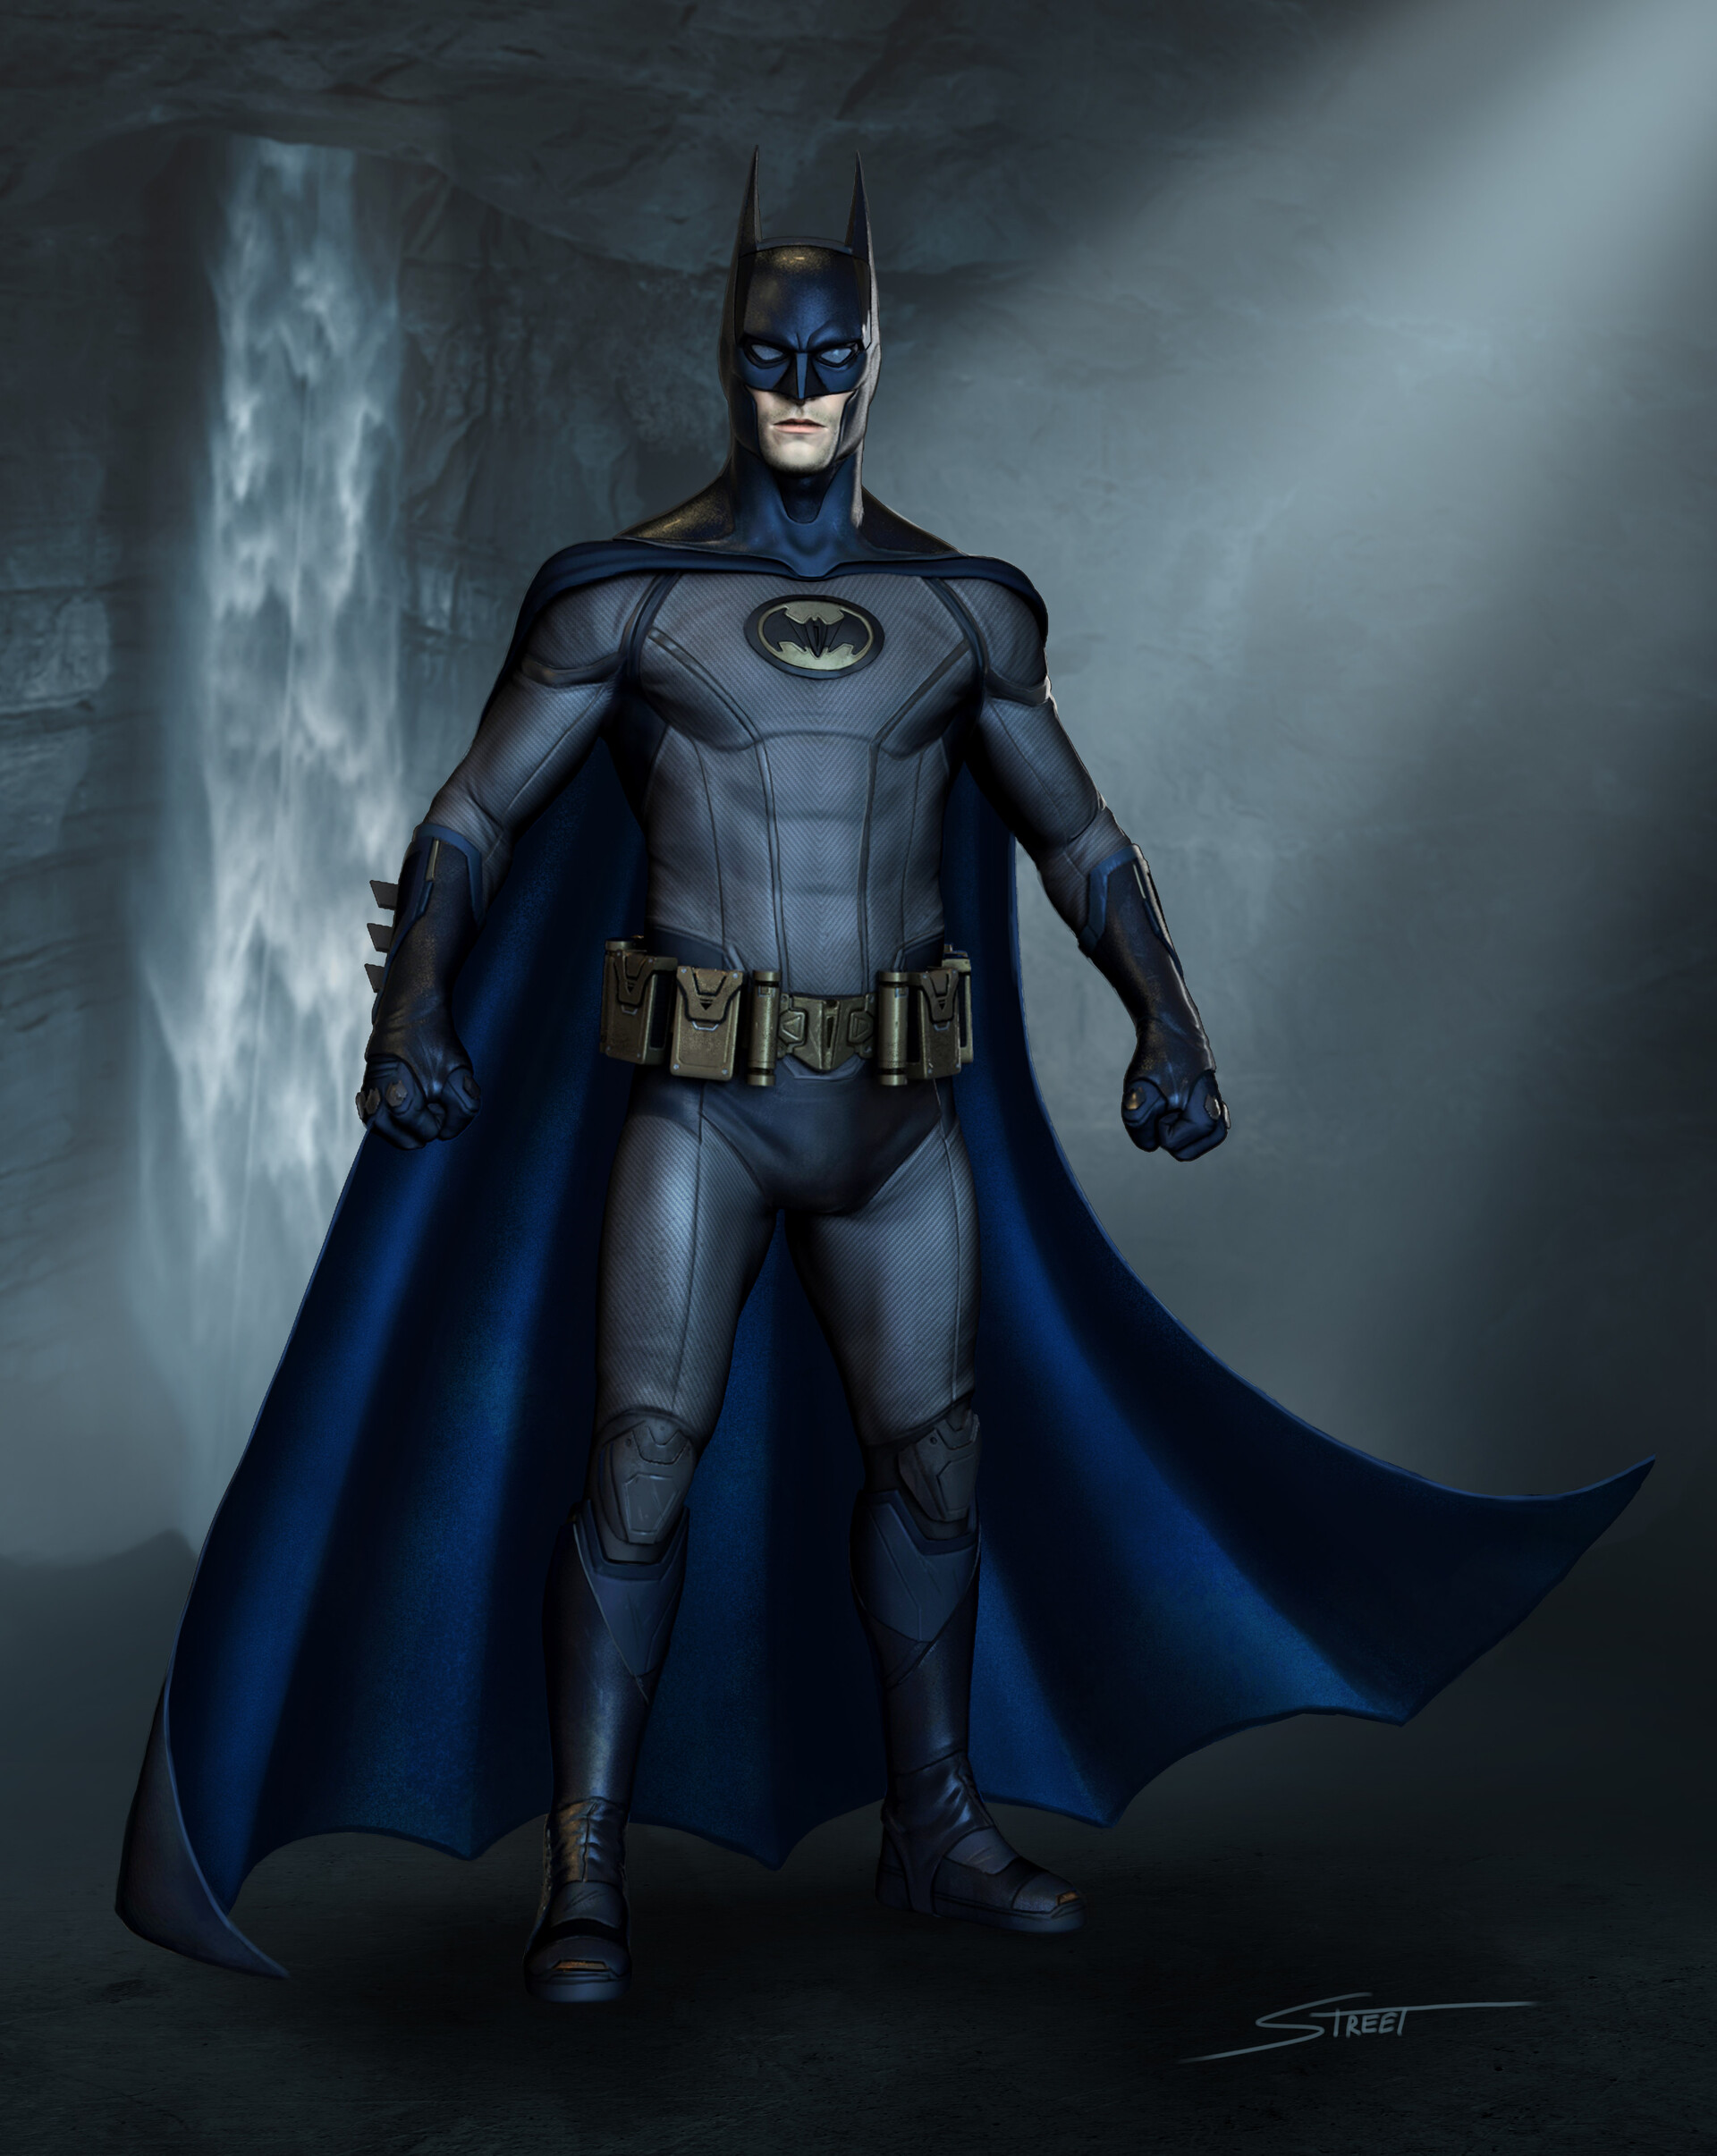 James Street - Batman | Fan Concept